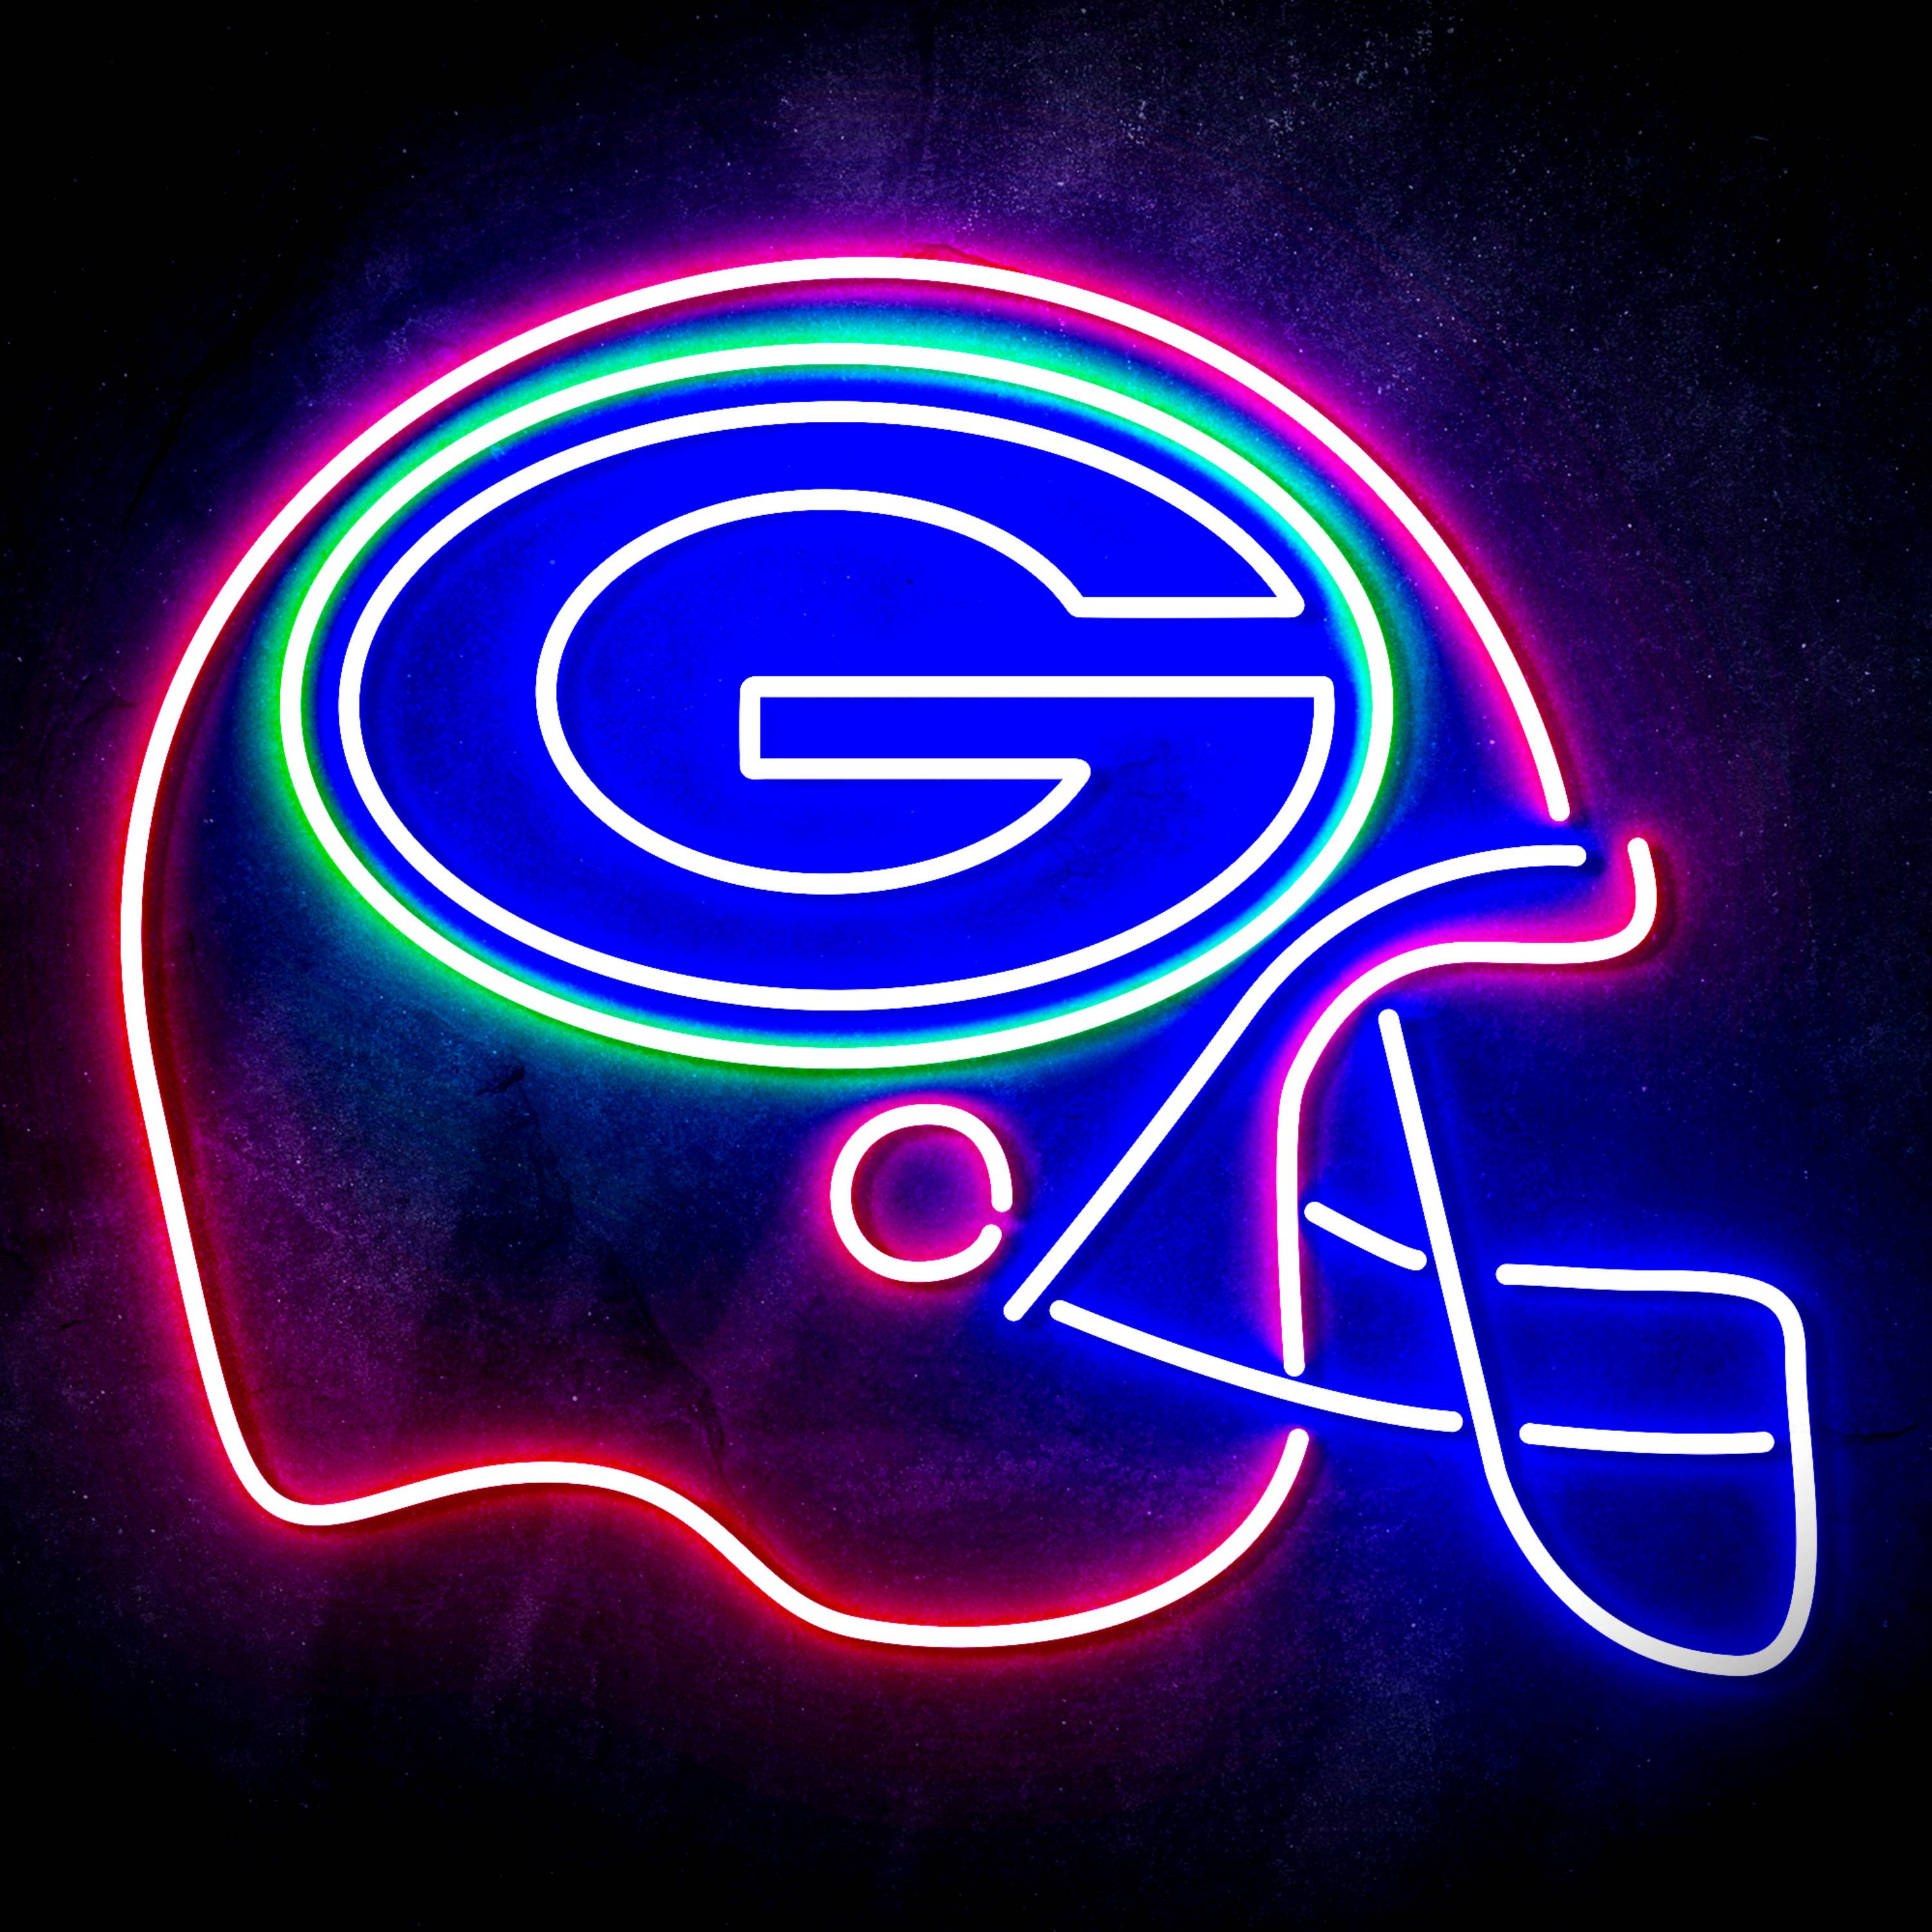 NFL Helmet Green Bay Packers LED Neon Sign